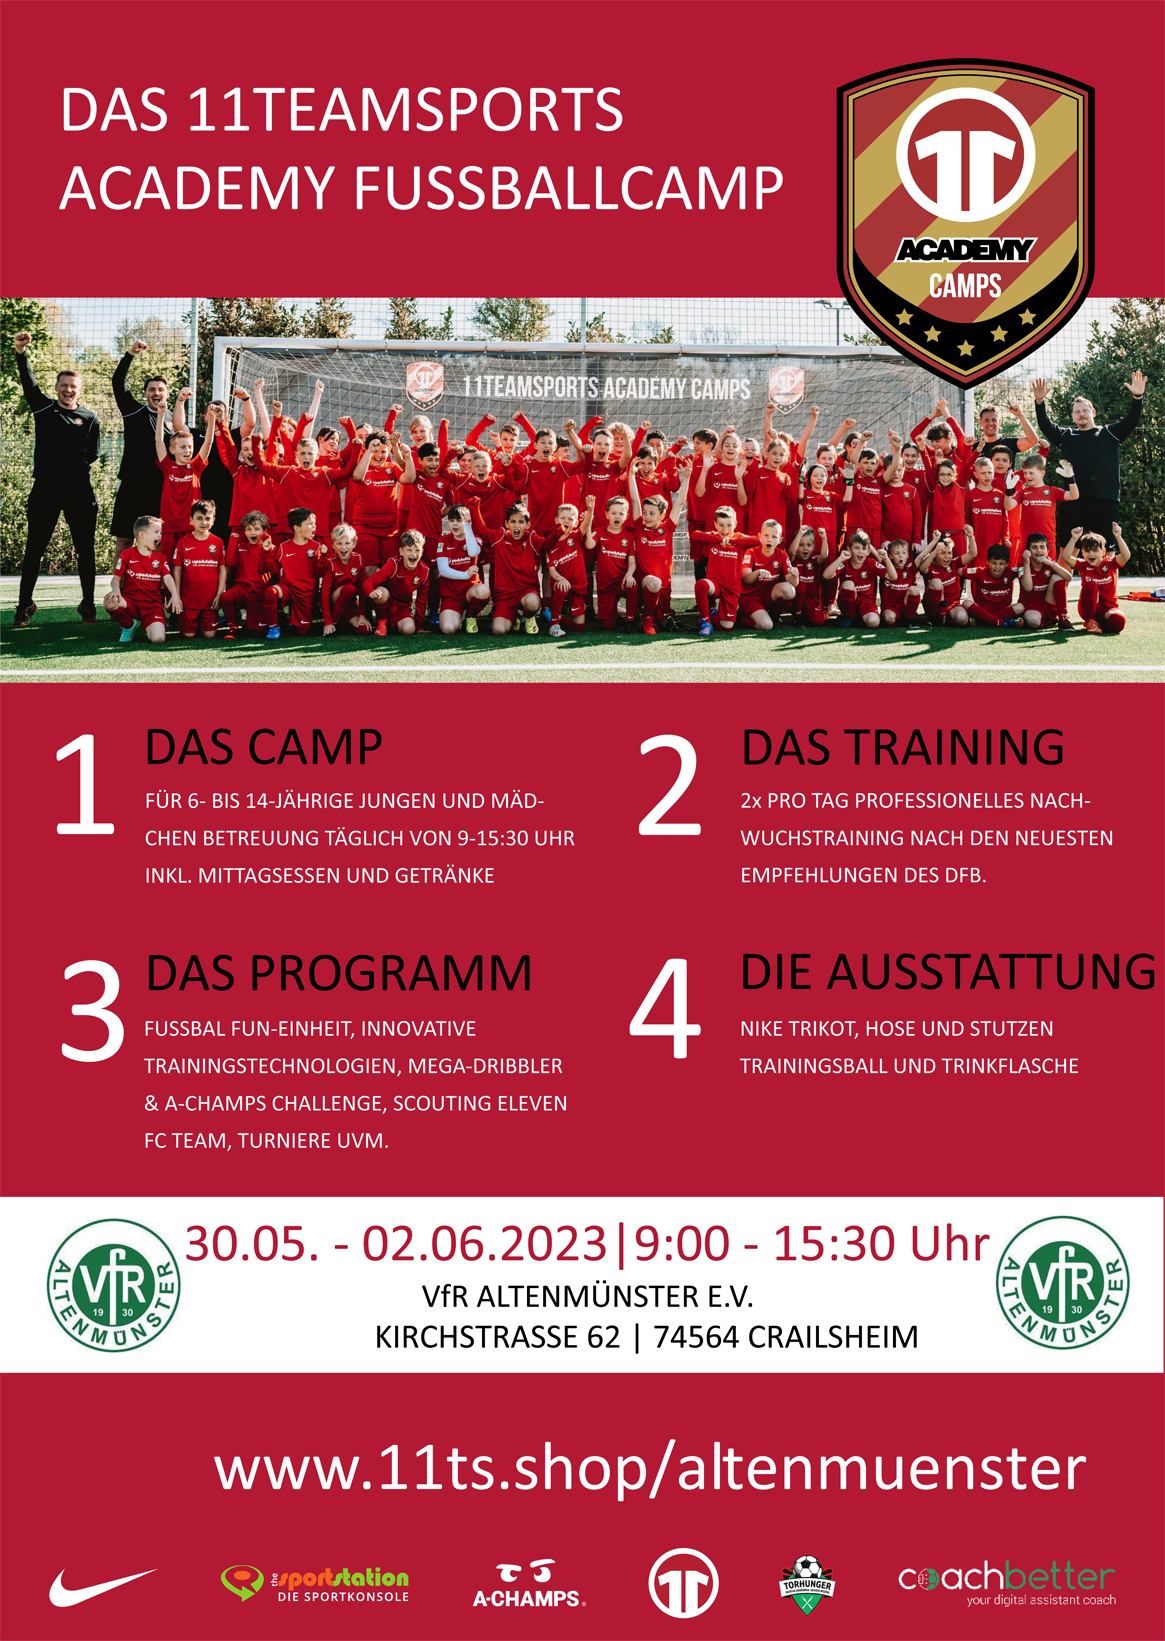 11teamsports Academy Fussballcamp